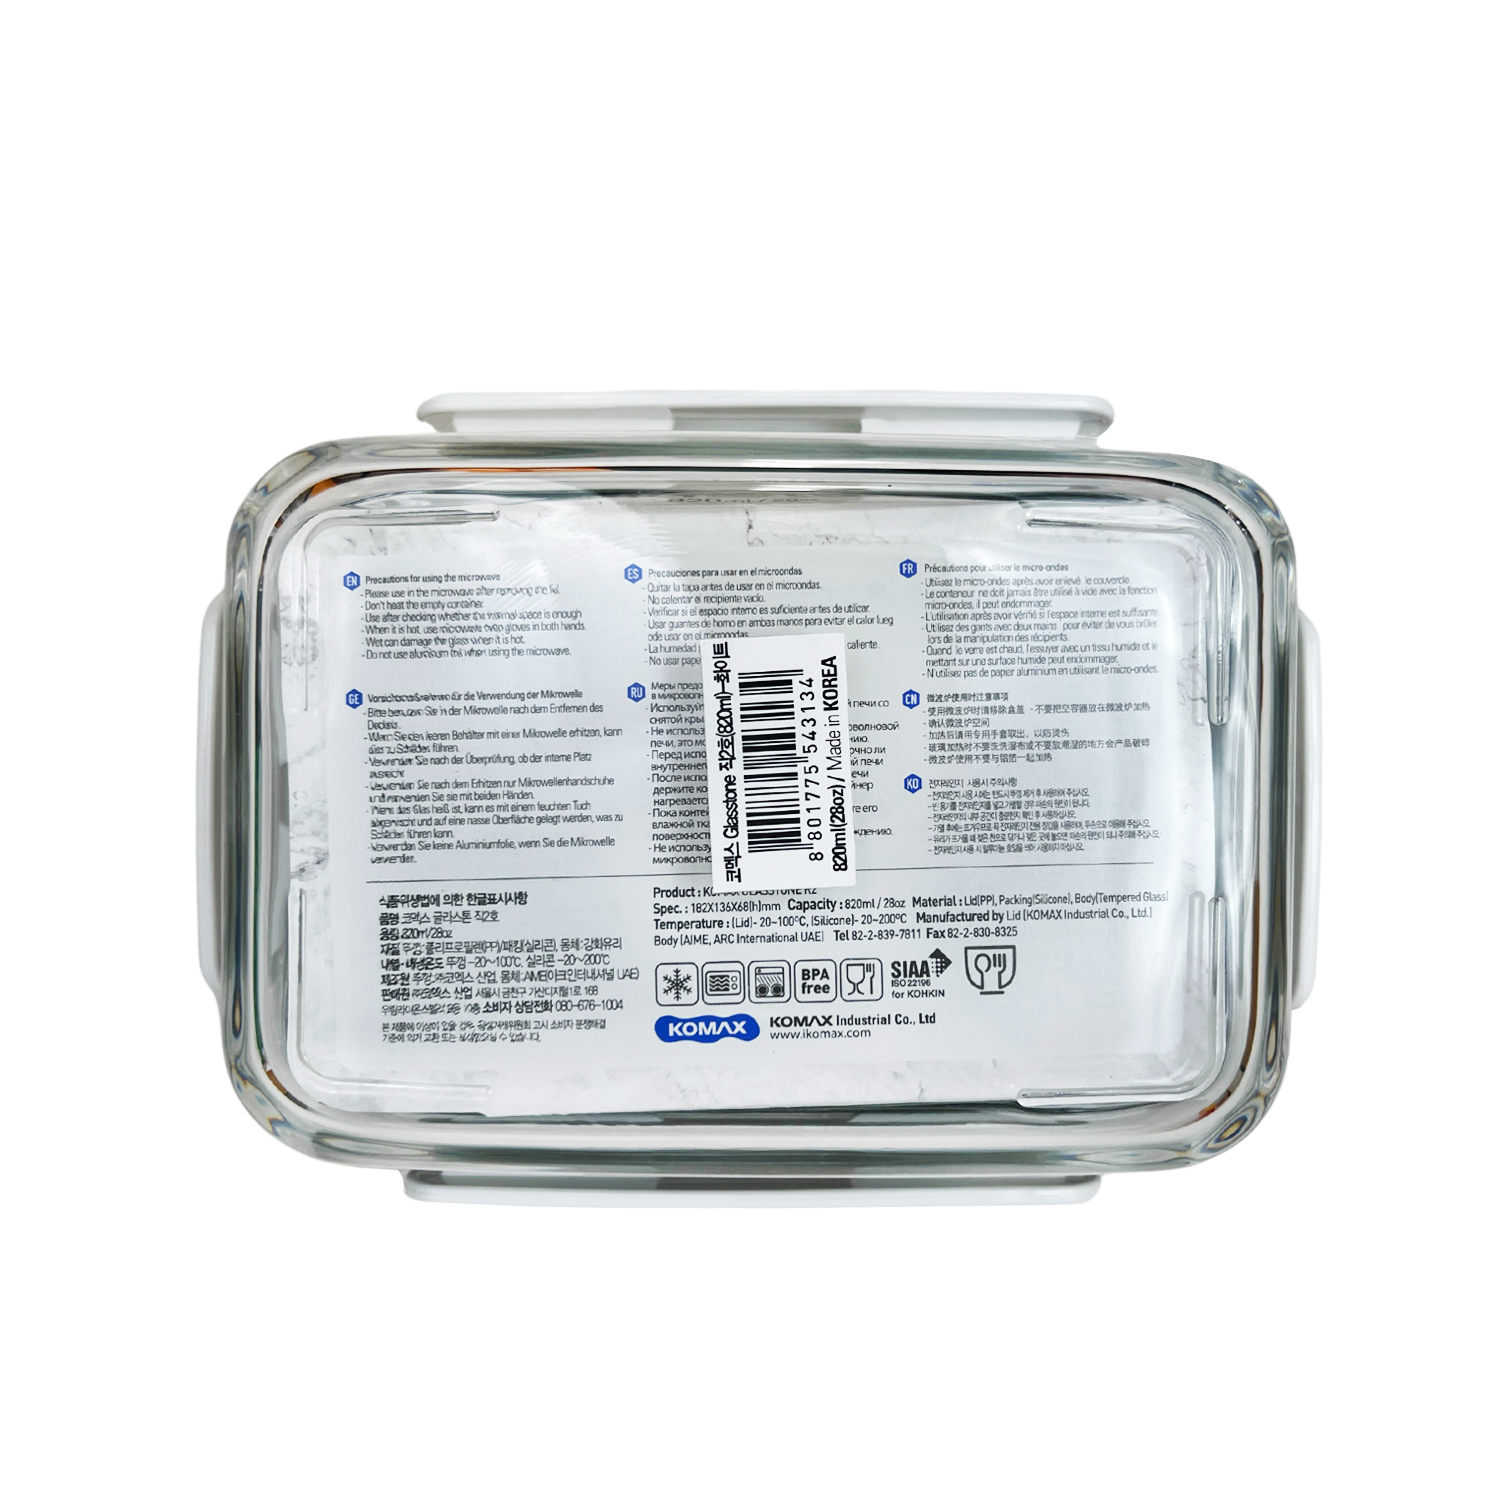 Komax Extra Large BPA-Free Food Storage Bins with Italy